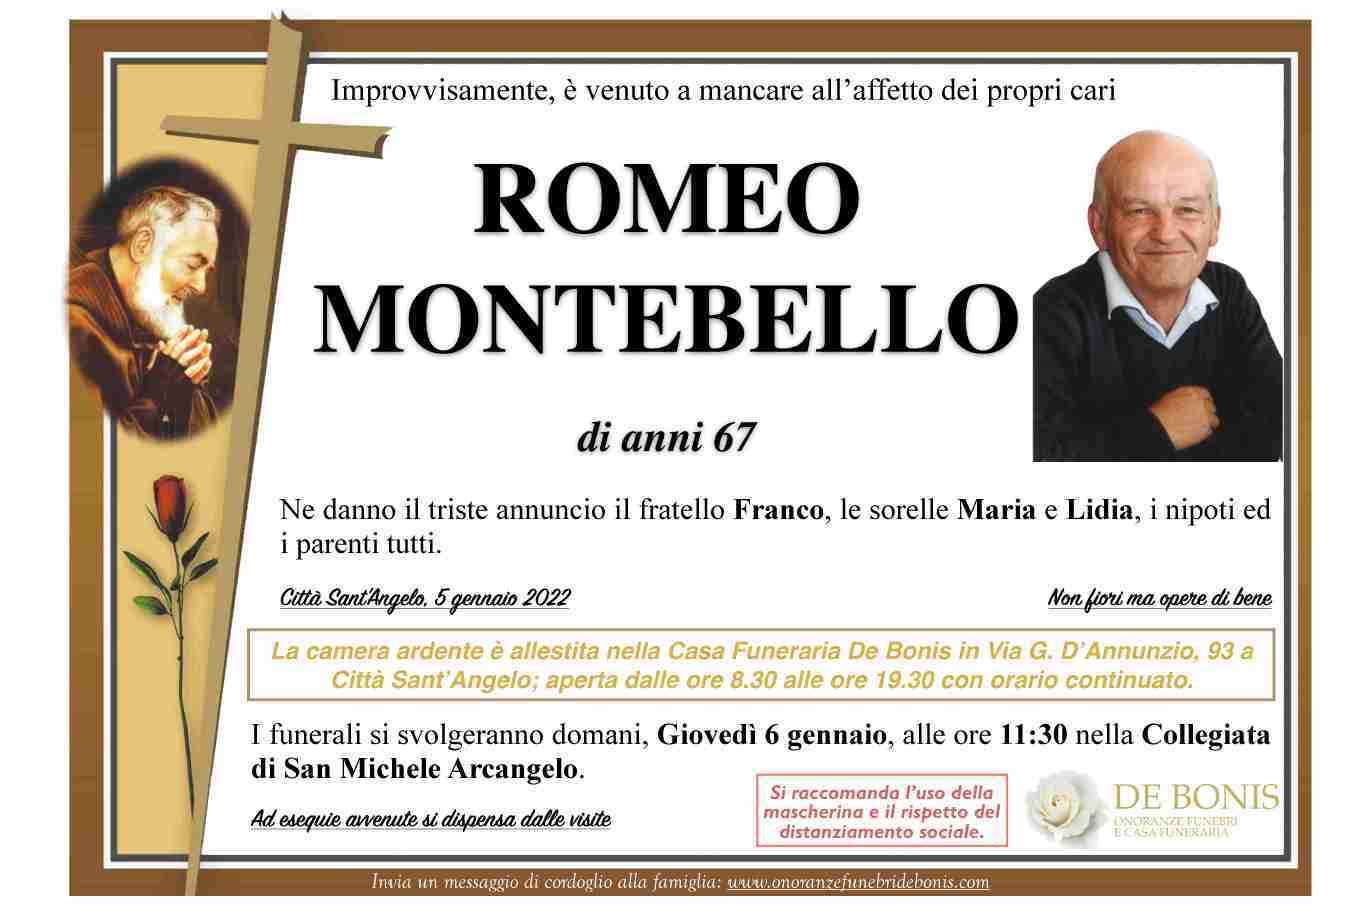 Romeo Montebello